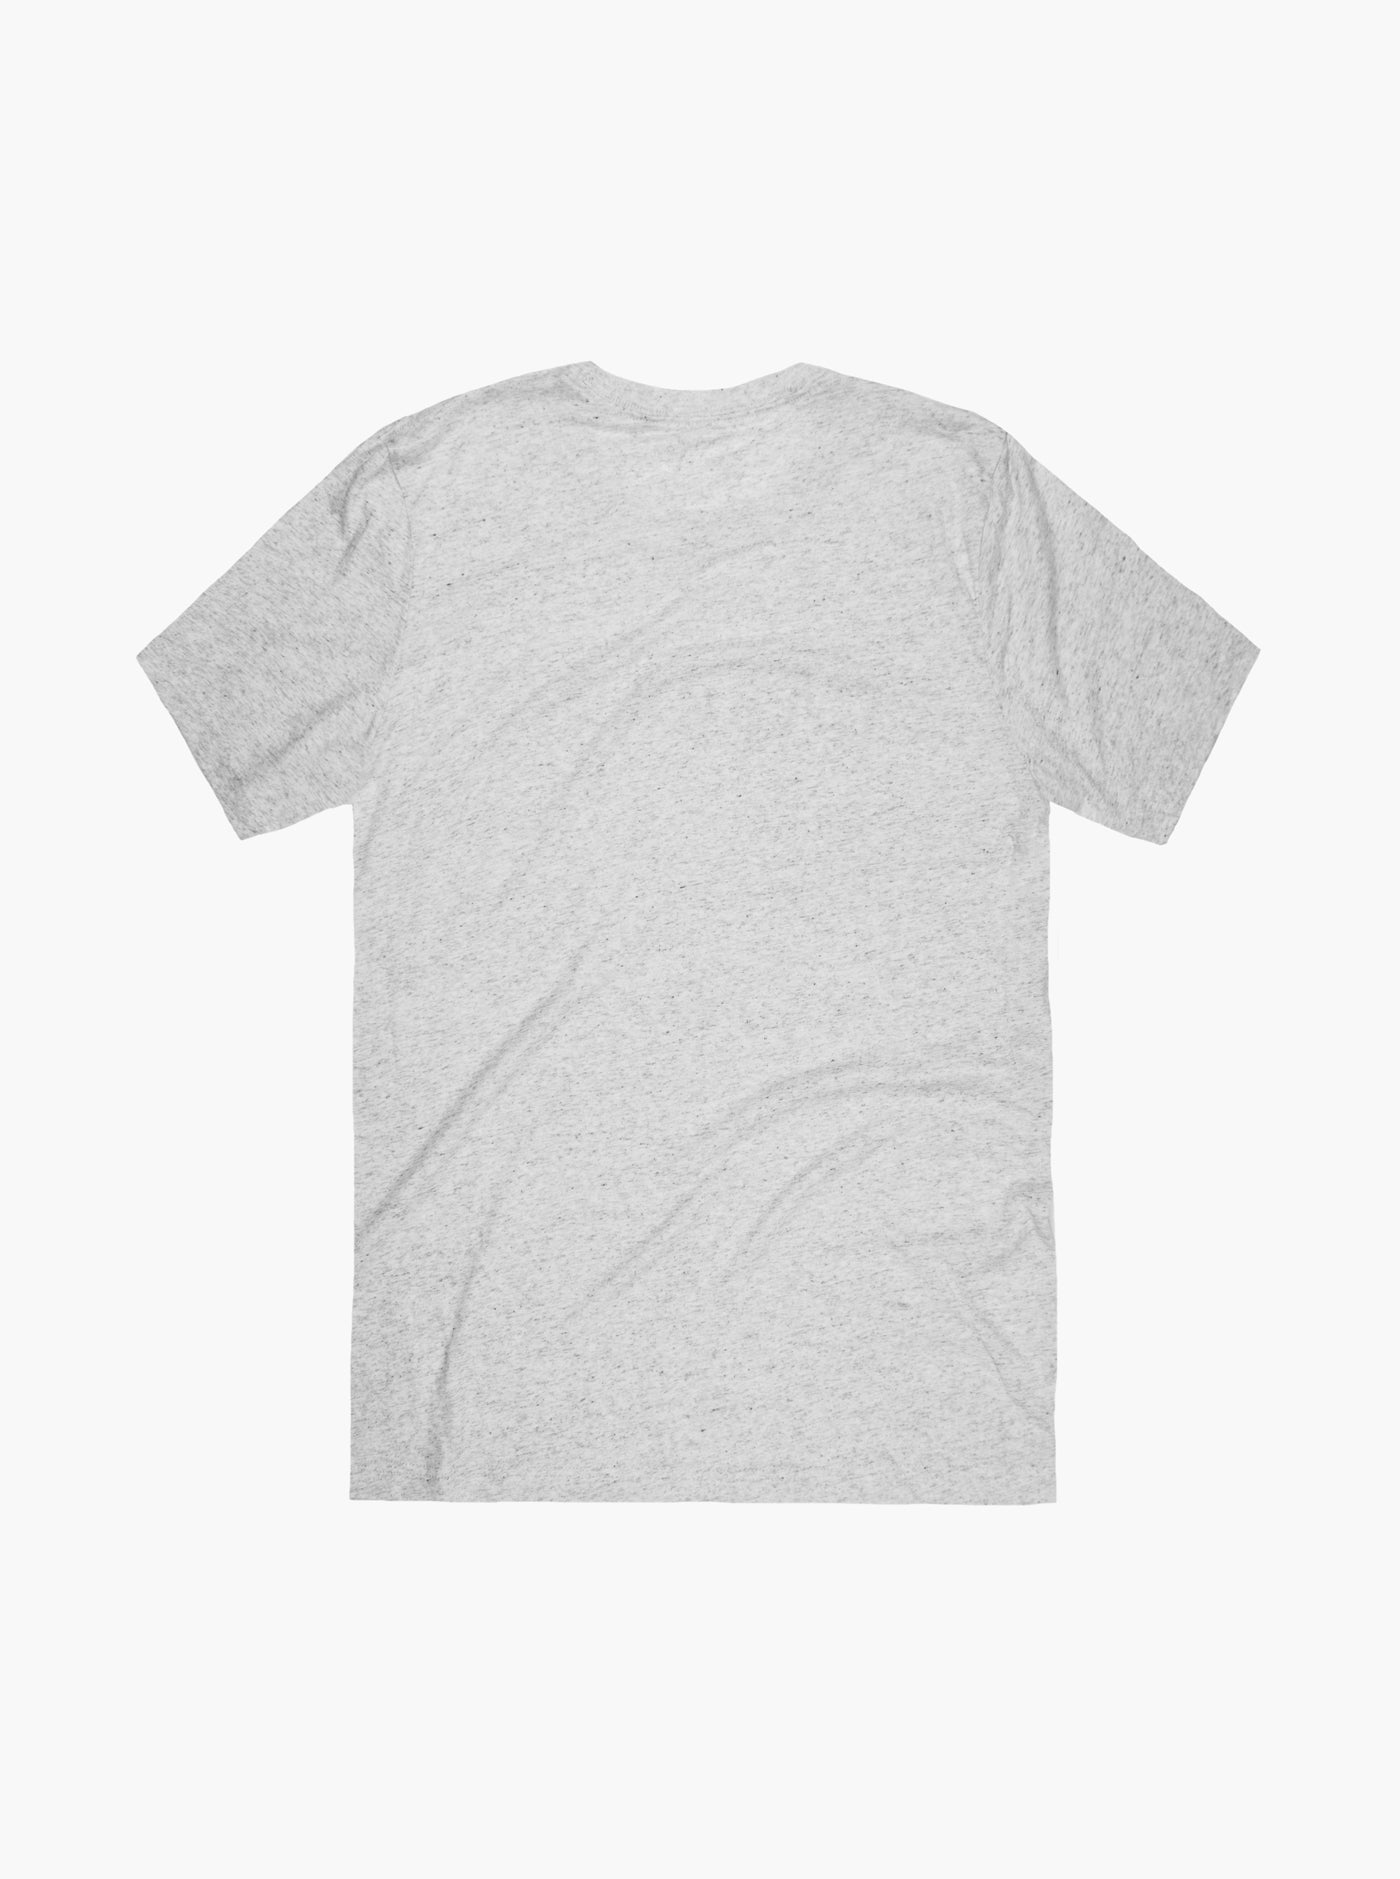 Escapade Unisex T-Shirt - Classic Logo - Raw White